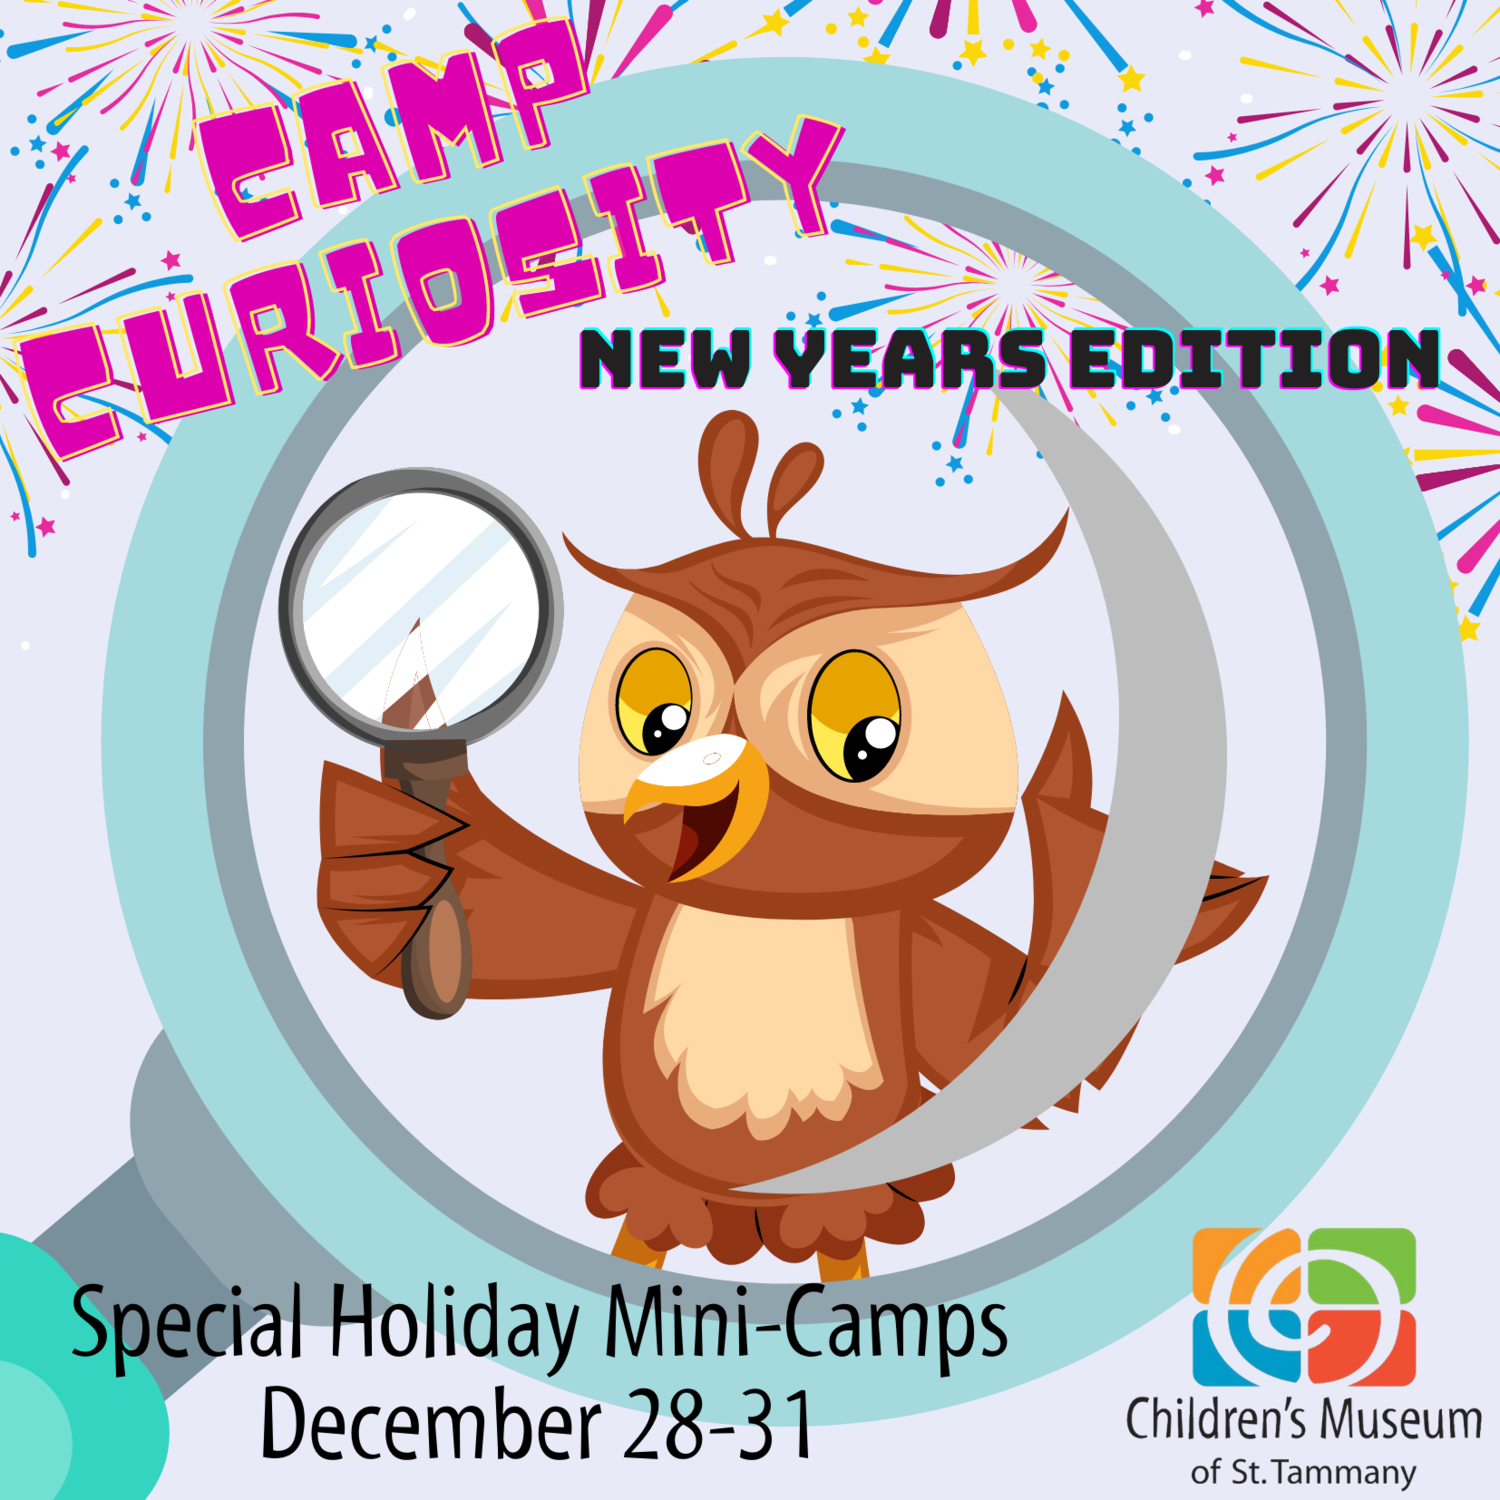 Camp Curiosity - New Years Edition Mini Camp